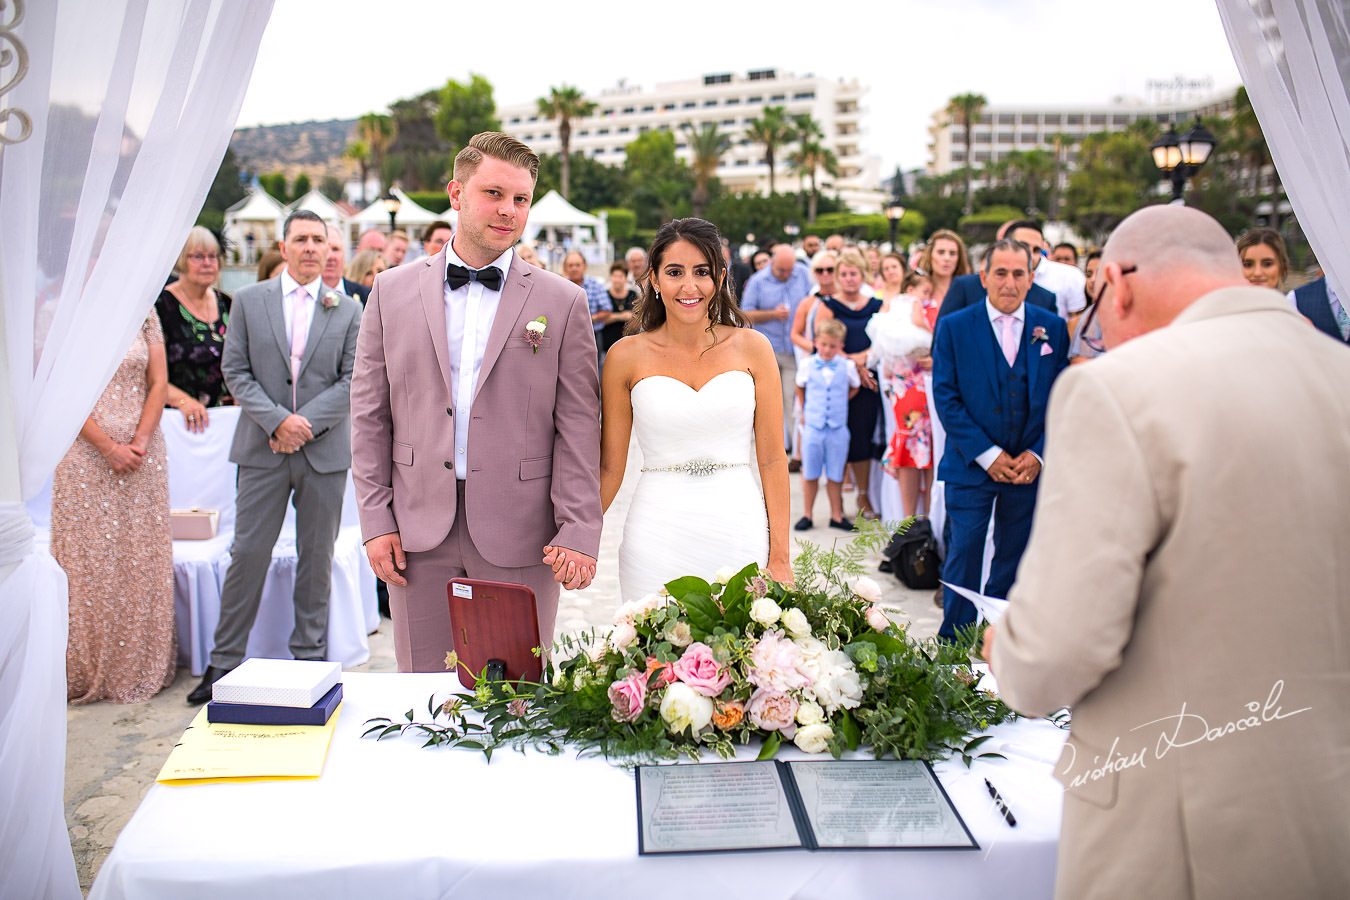 Wedding moments during a Beautiful Wedding at Elias Beach Hotel captured by Cyprus Photographer Cristian Dascalu.